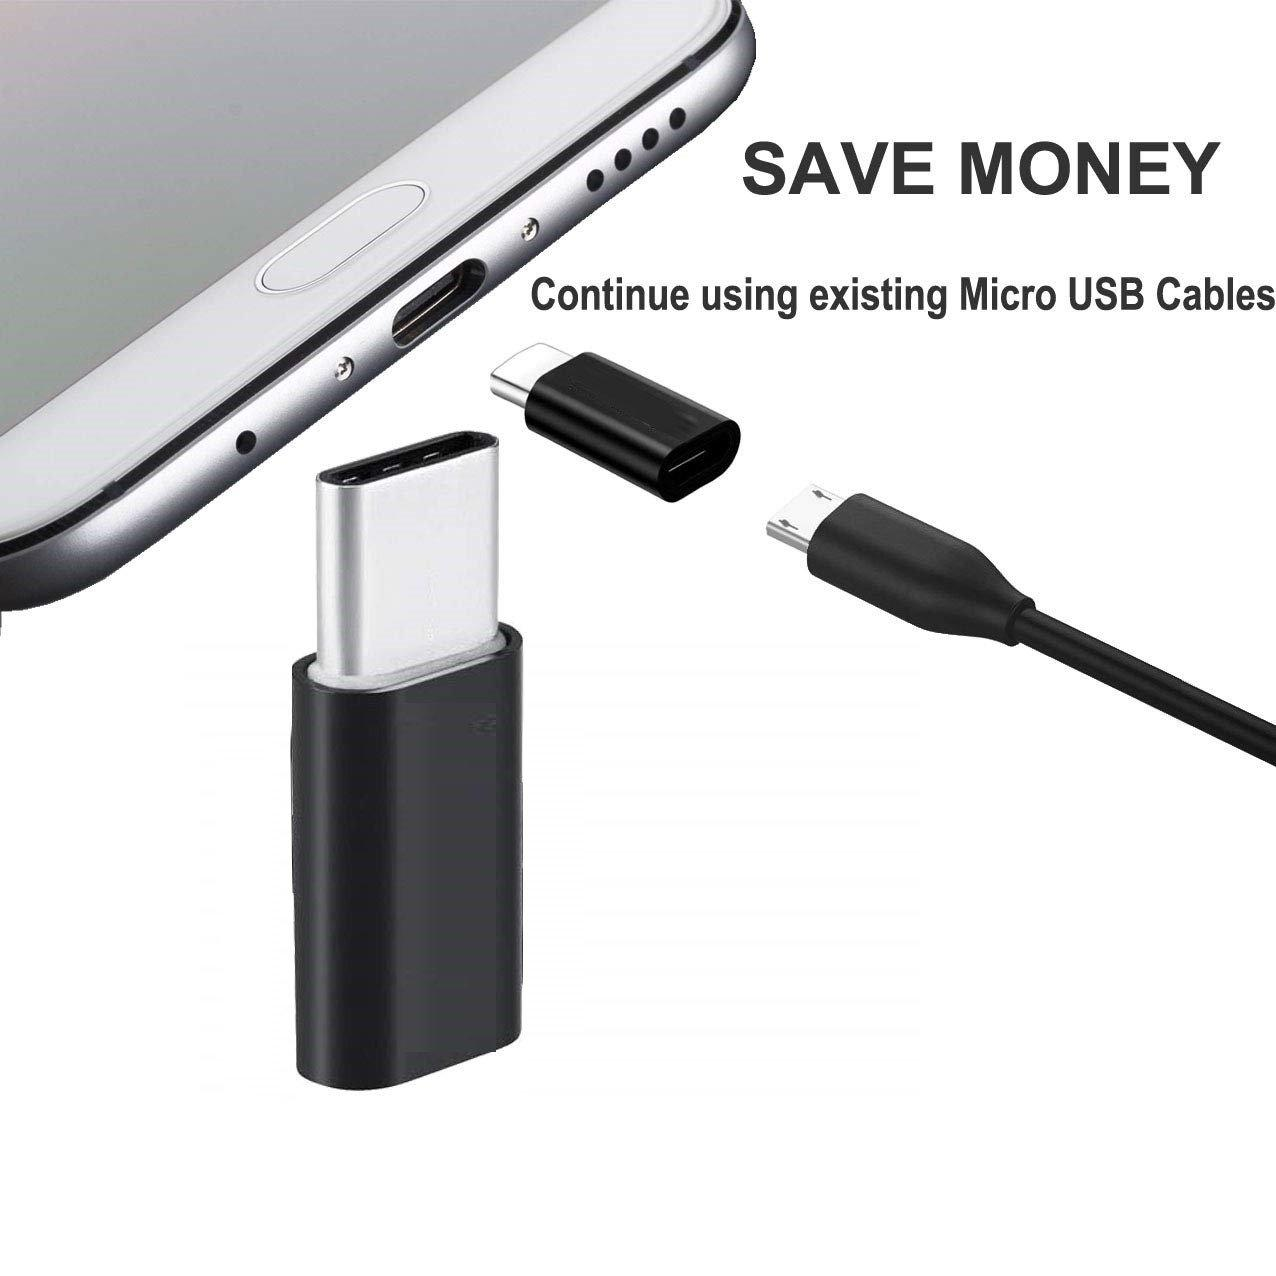 INF Micro-USB zu USB-C Adapter - Konverter schwarz